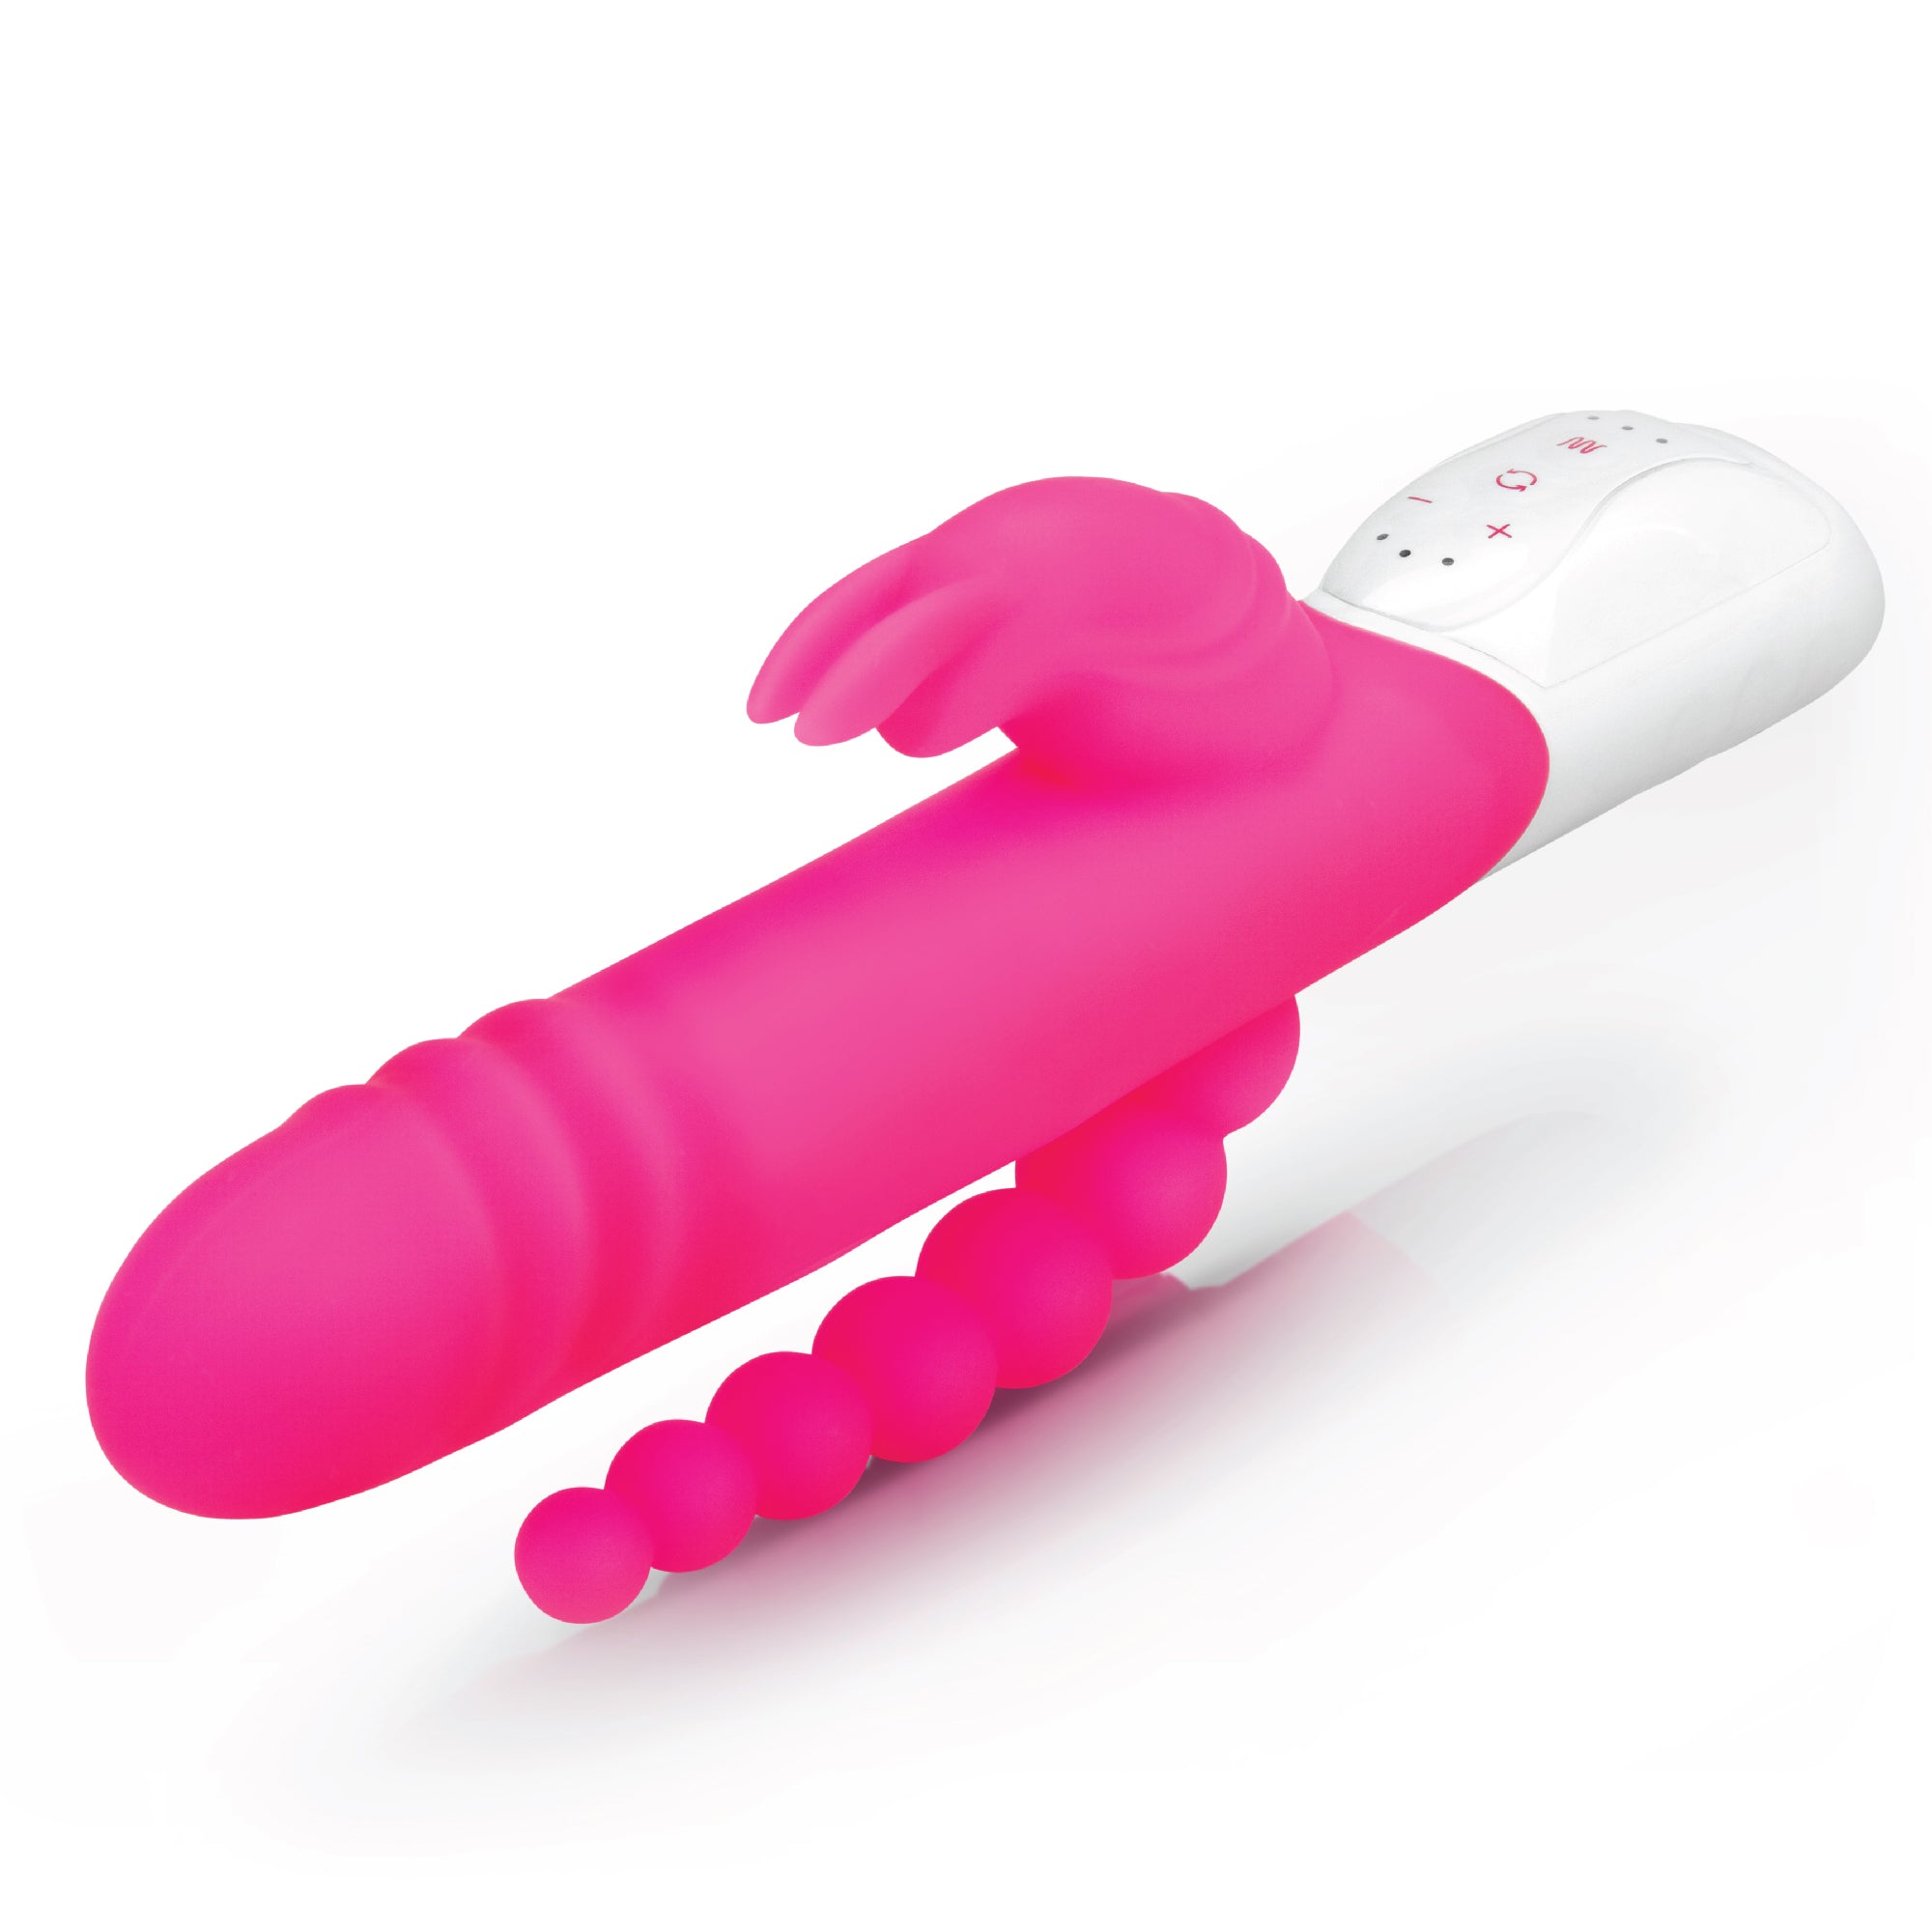 deidra schroeder recommends dual penetration sex toy pic